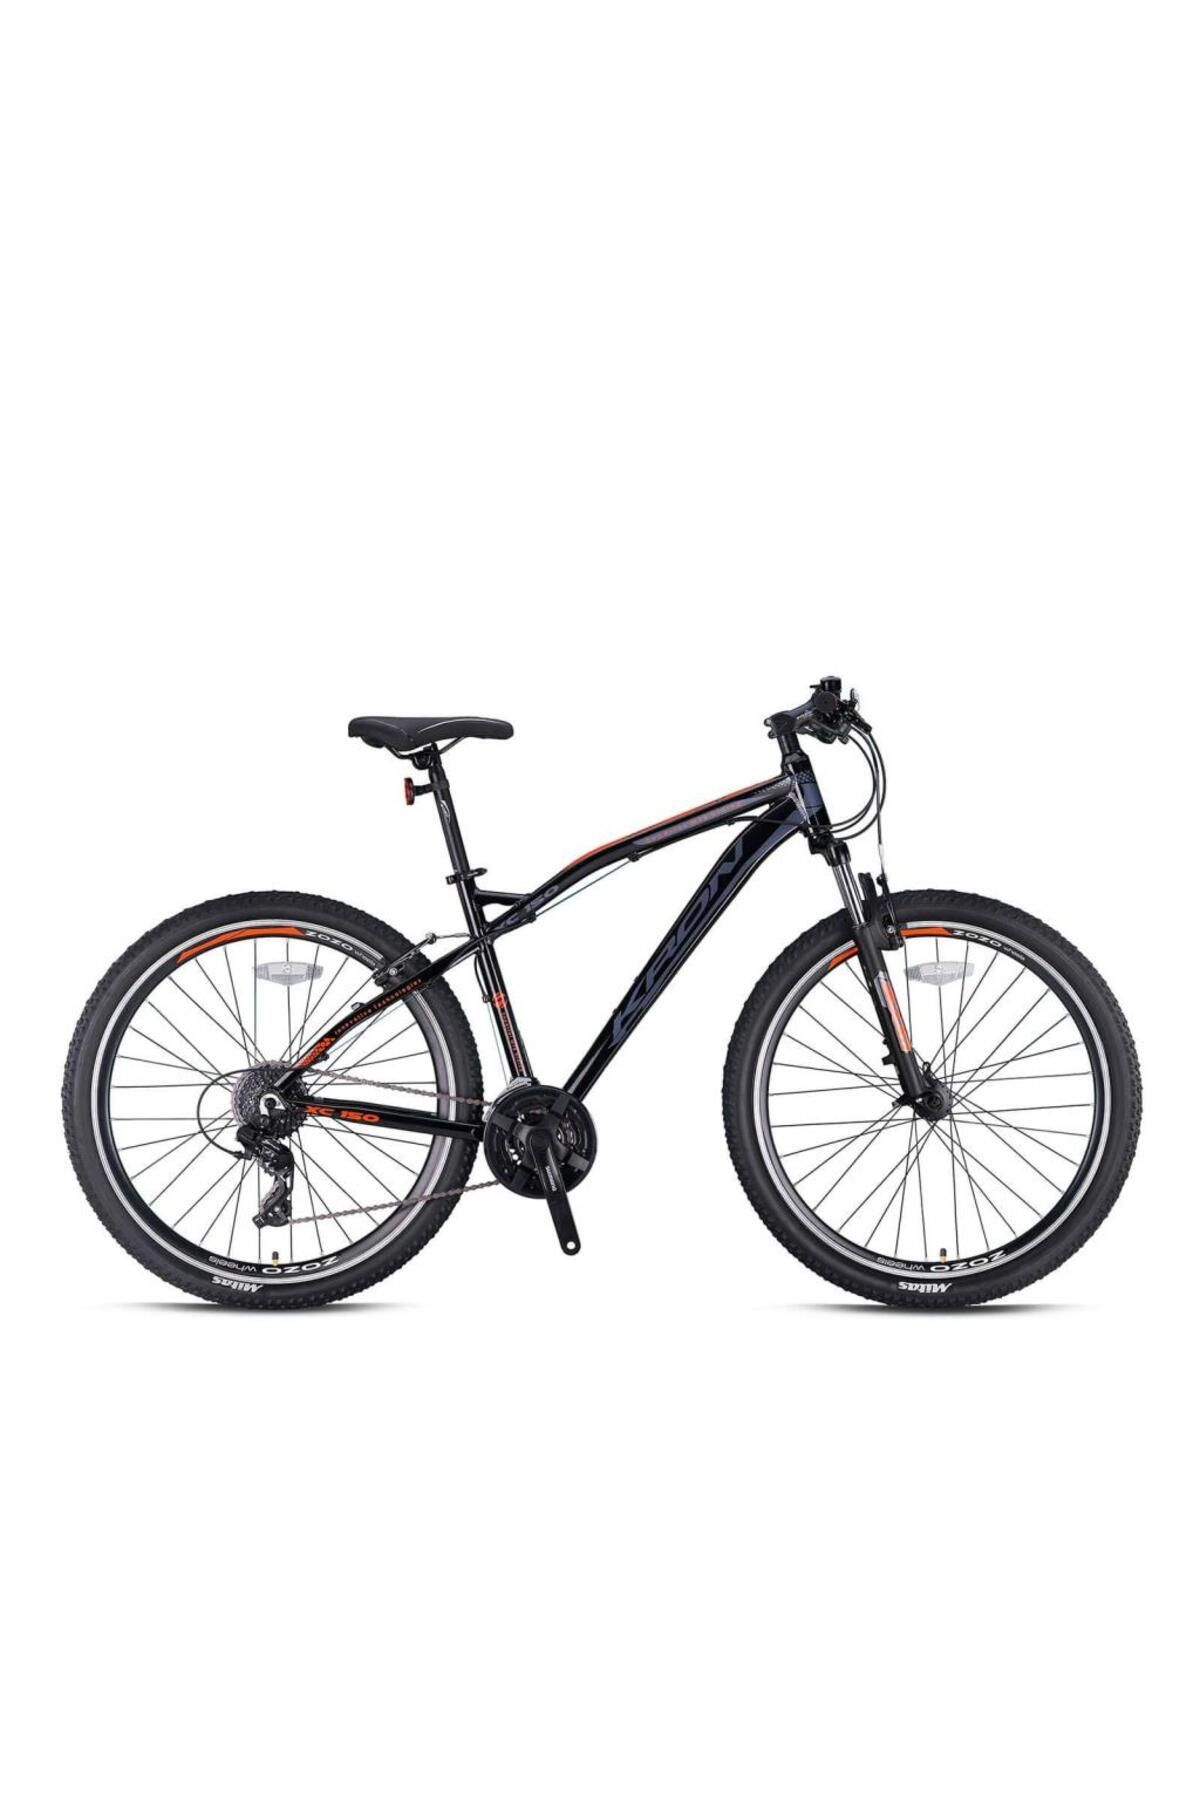 Kron Xc 150 V-fren 27.5 Jant Dağ Bisikleti Kadro 17 I?nç Siyah-neon Turuncu 2022